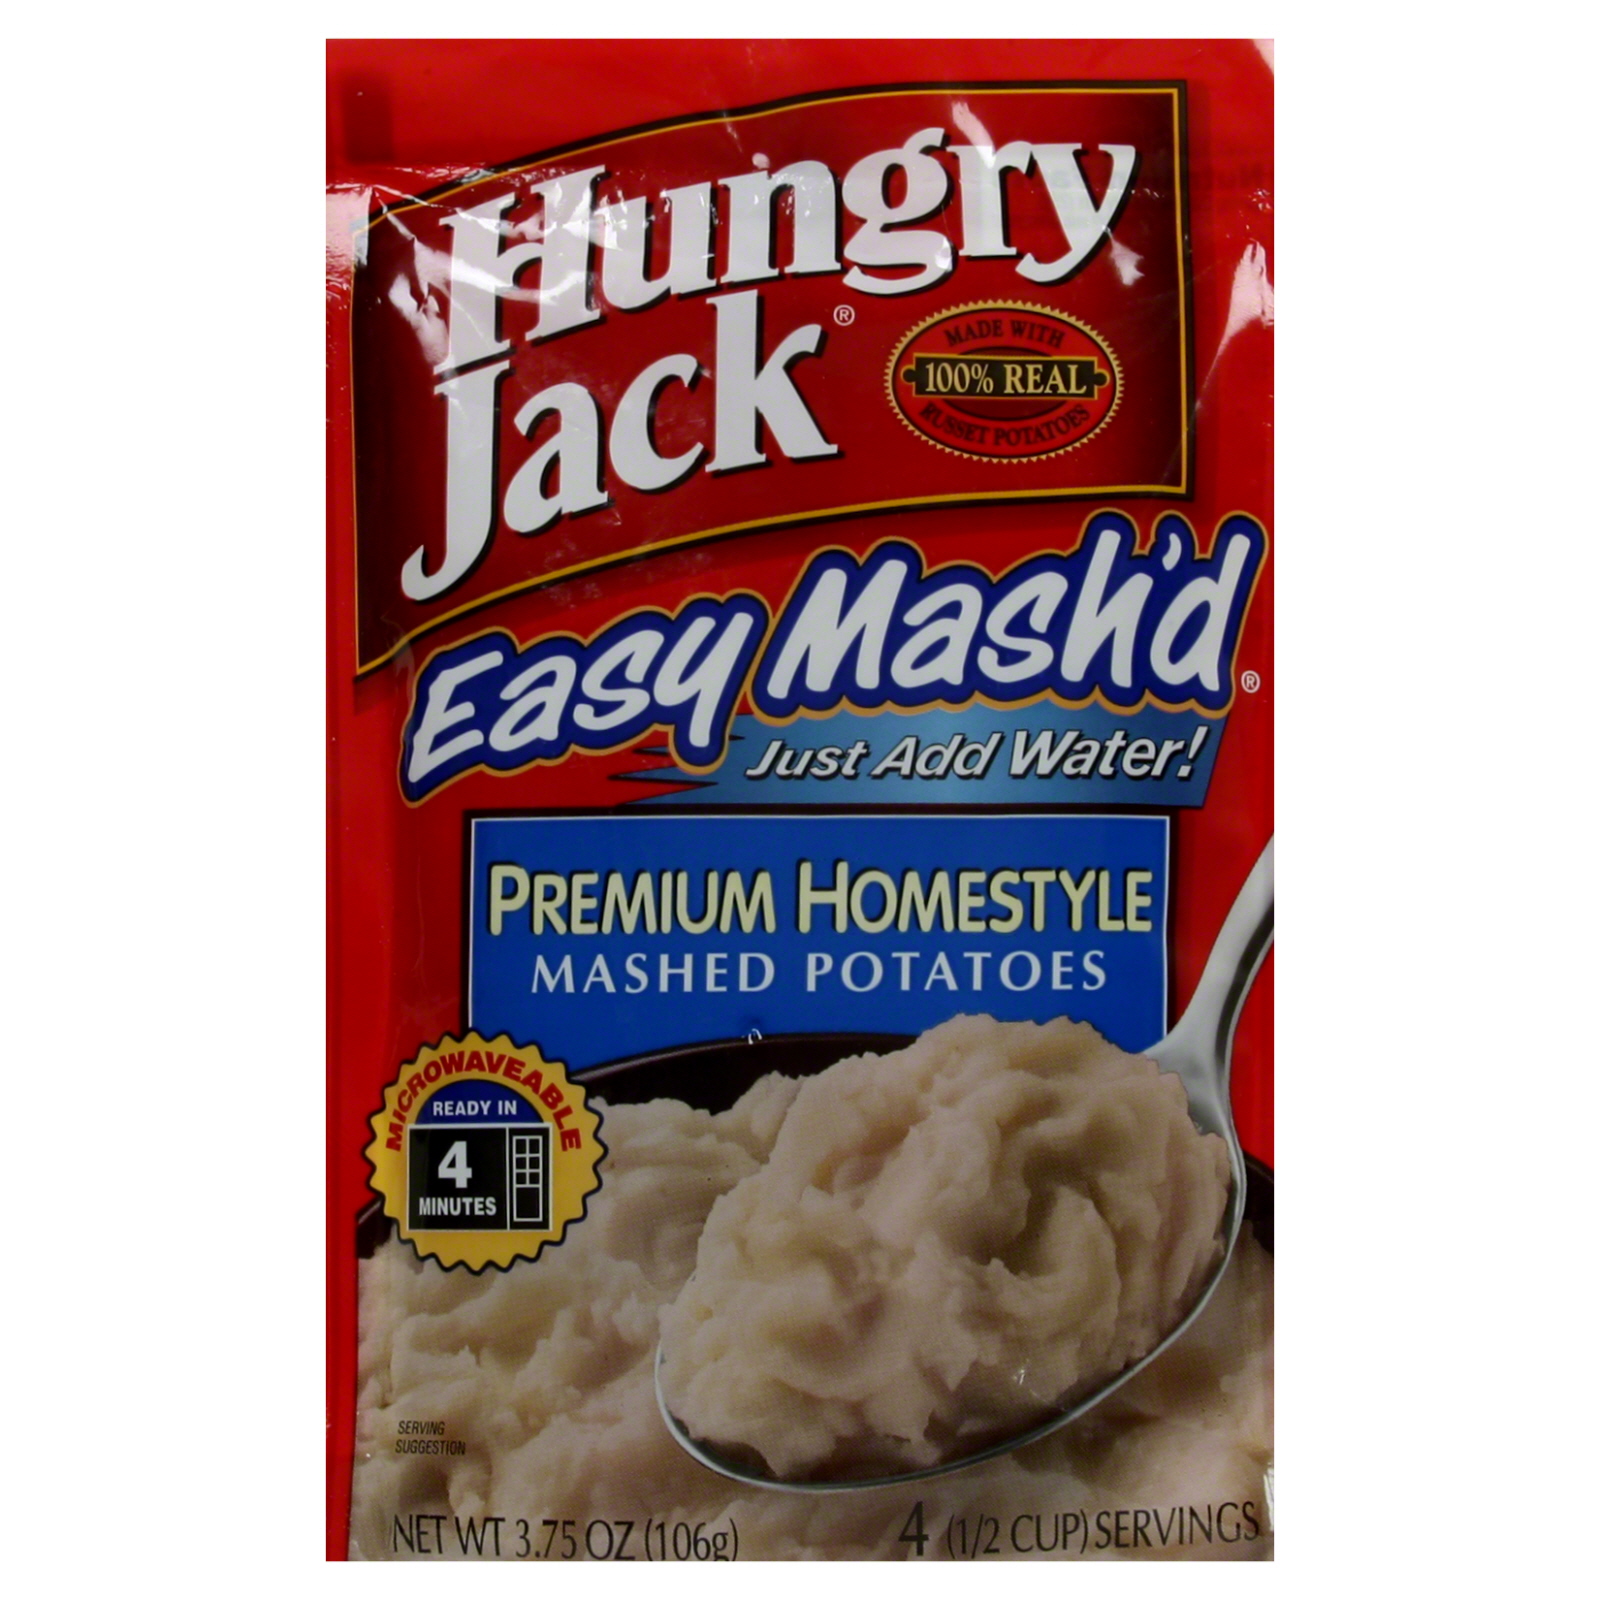 Hungry Jack Easy Mash'd Mashed Potatoes, Premium Homestyle, 3.75 oz (106 g)